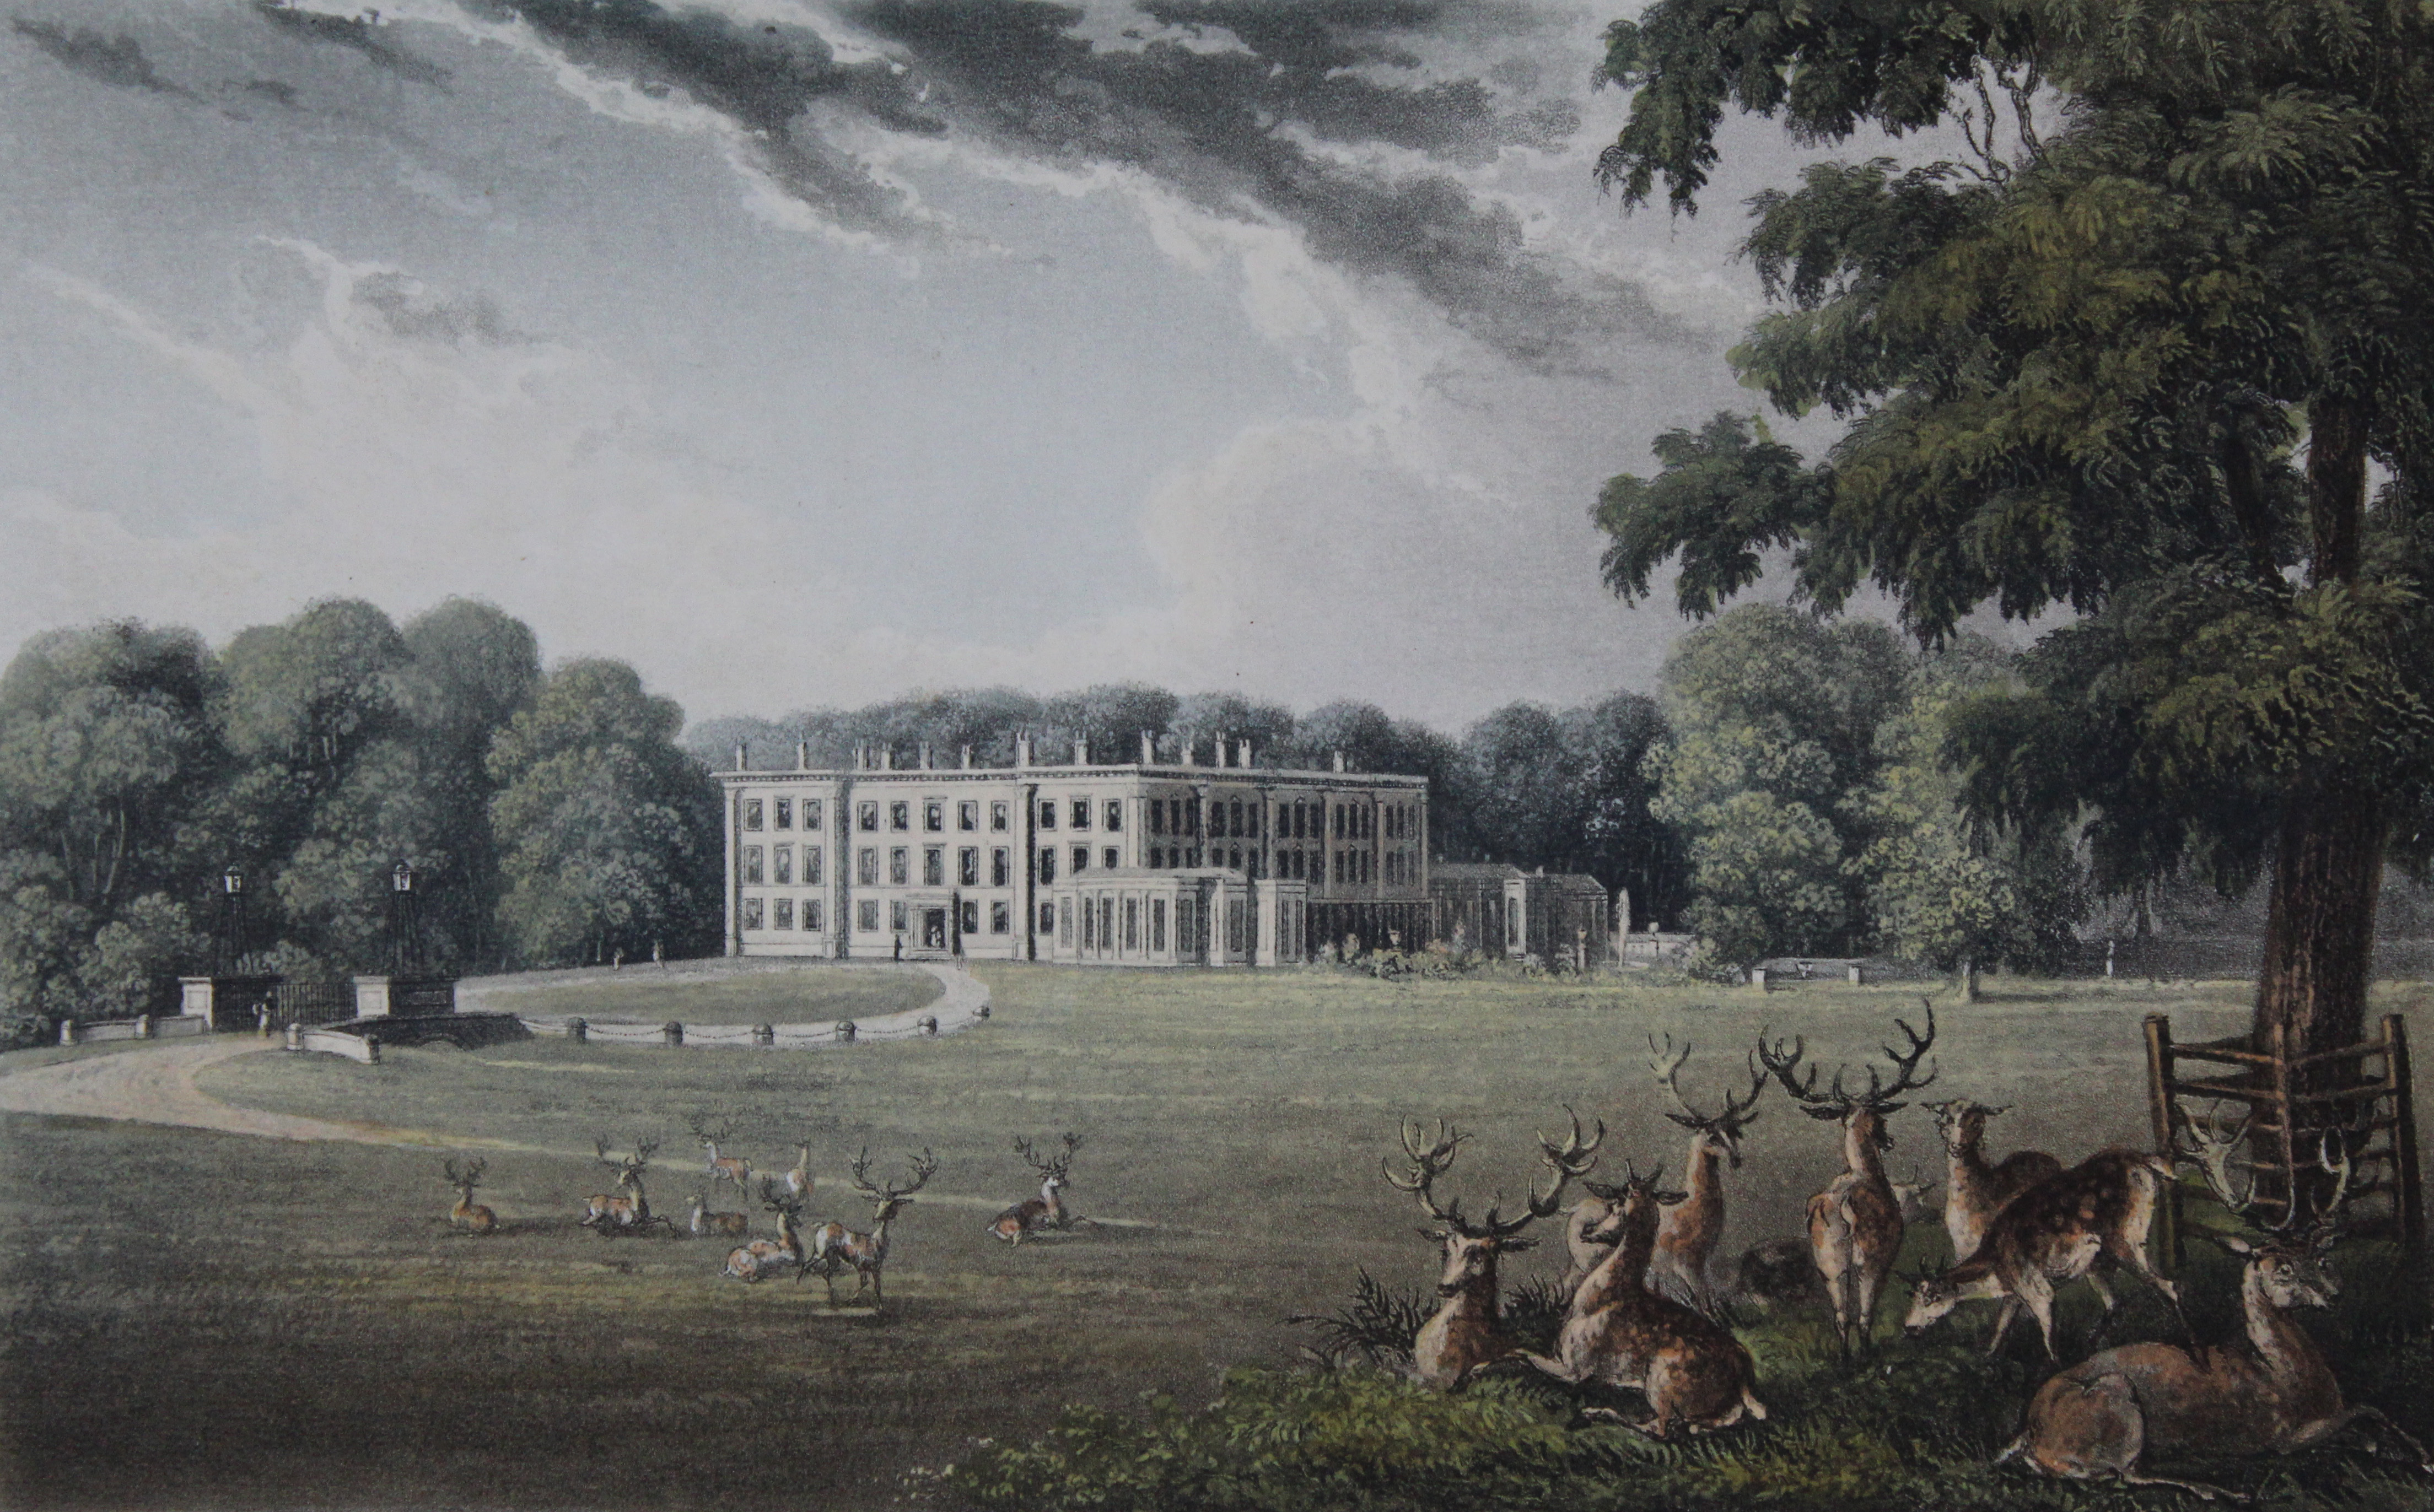 Trentham Hall designed by Henry Holland 1845-1806